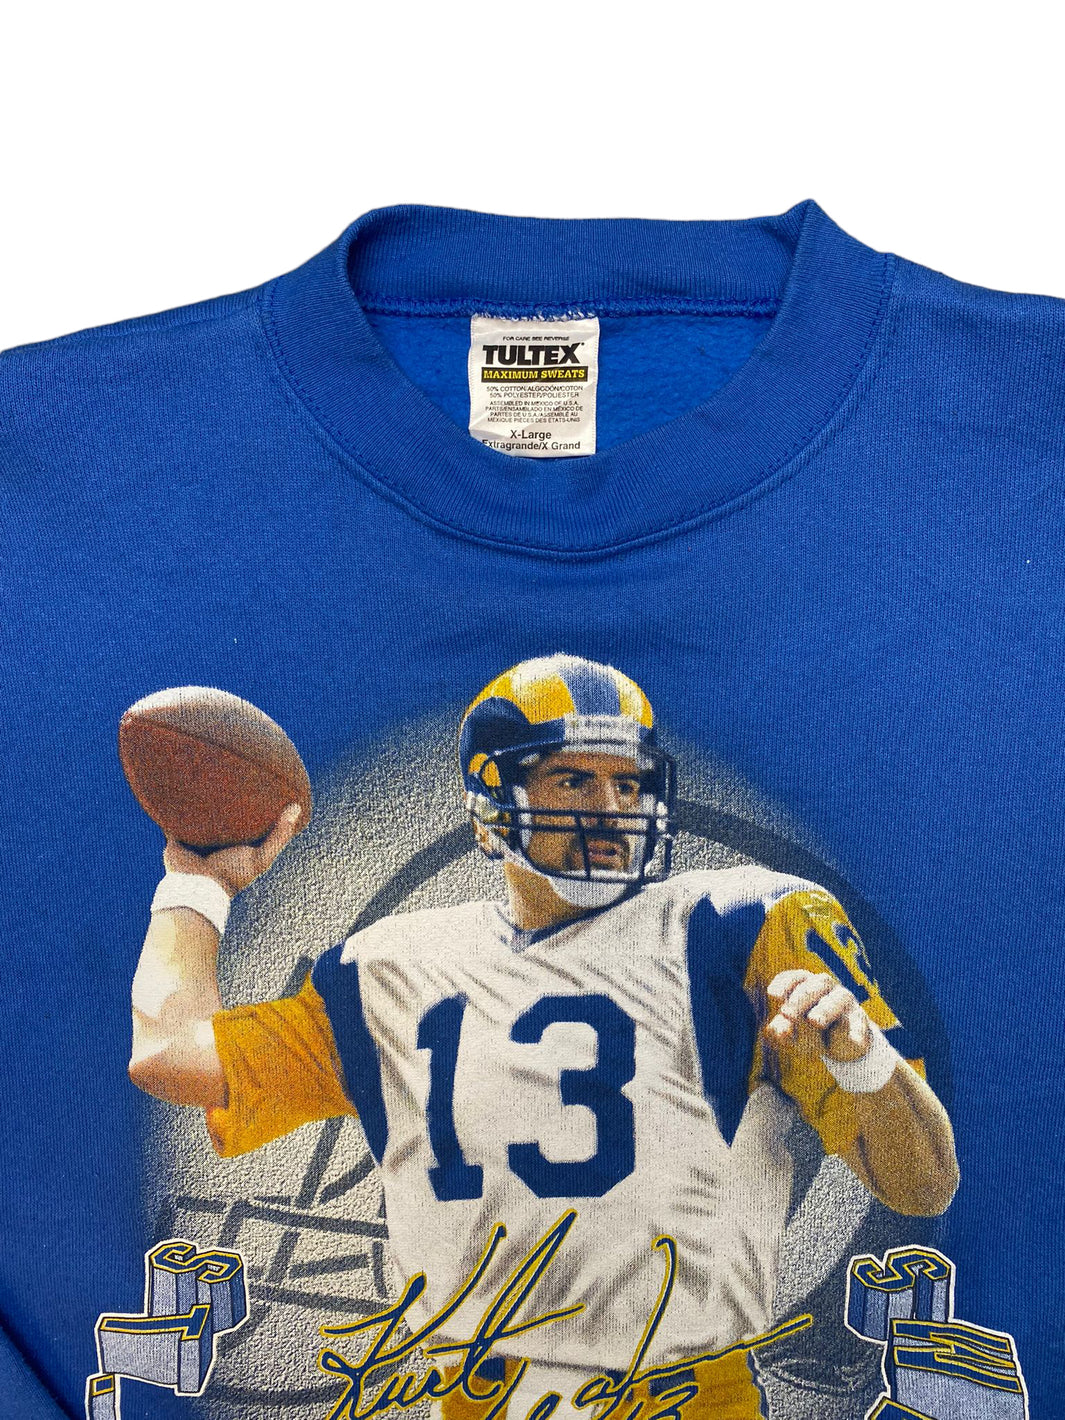 NFL Rams Sweater 90s